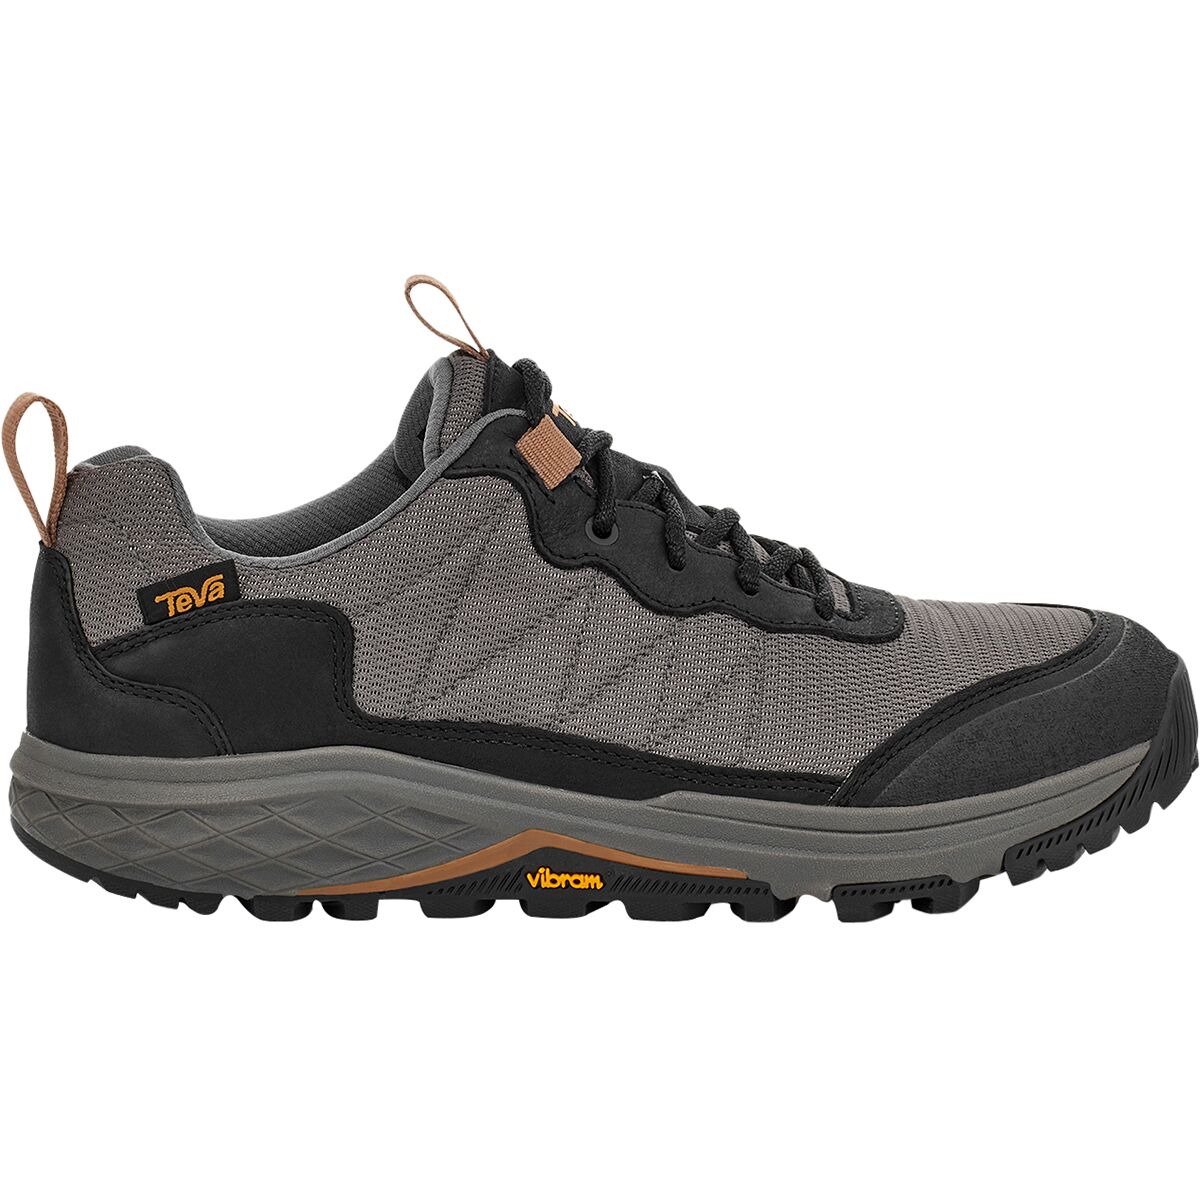 Teva Ridgeview Low Ripstop Hiking Shoe - Men's